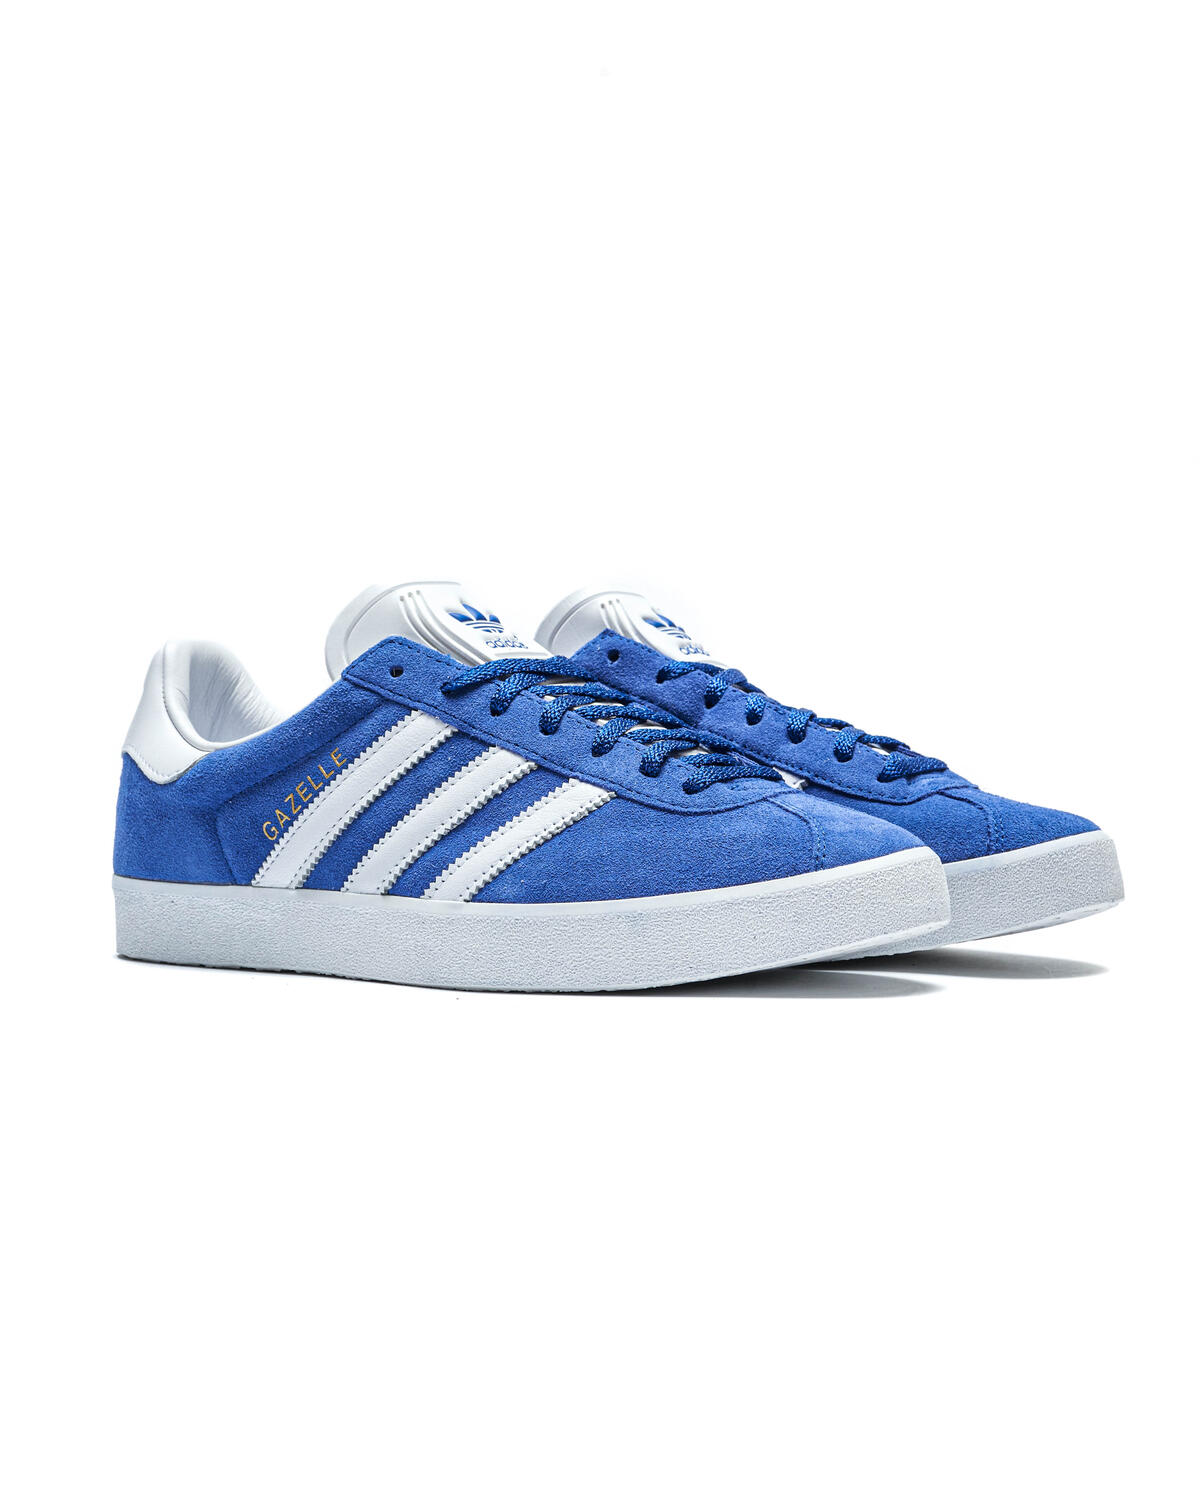 Adidas Gazelle Trainers Royal Blue/White